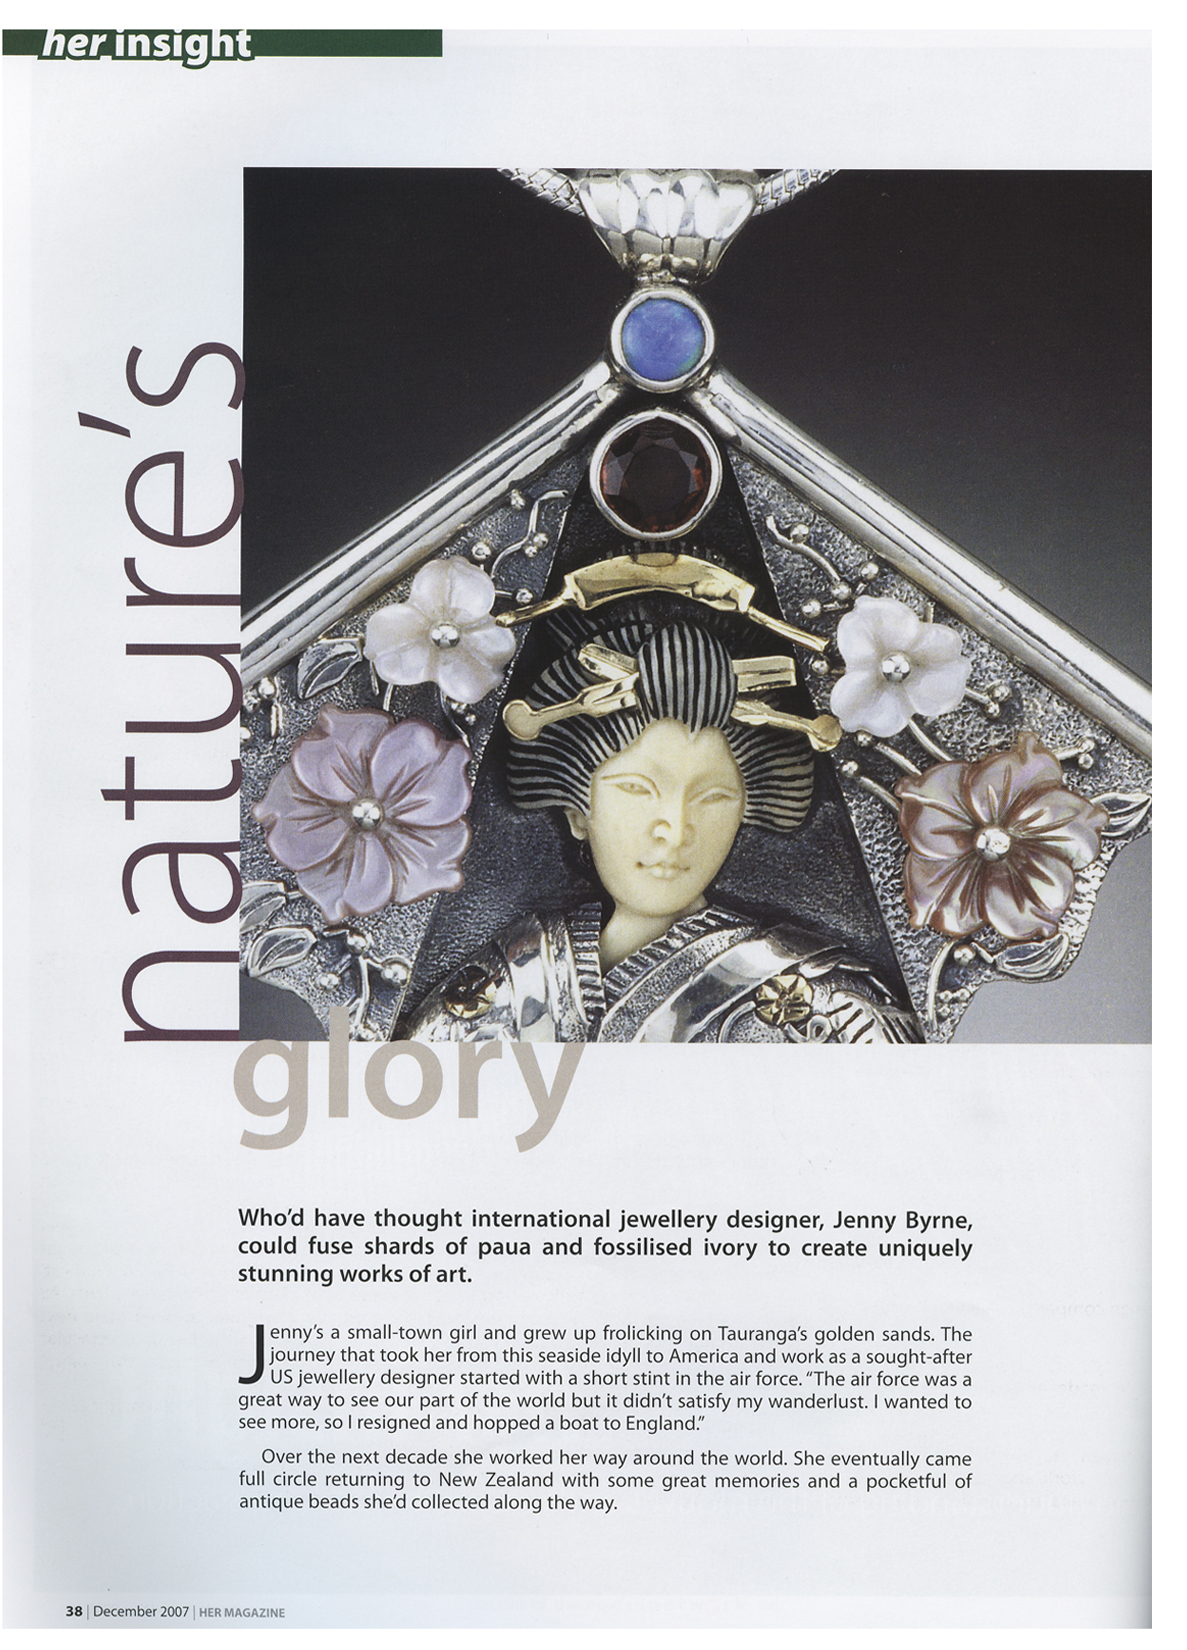 Zealandia jewelry, Jenny Byrne article 1